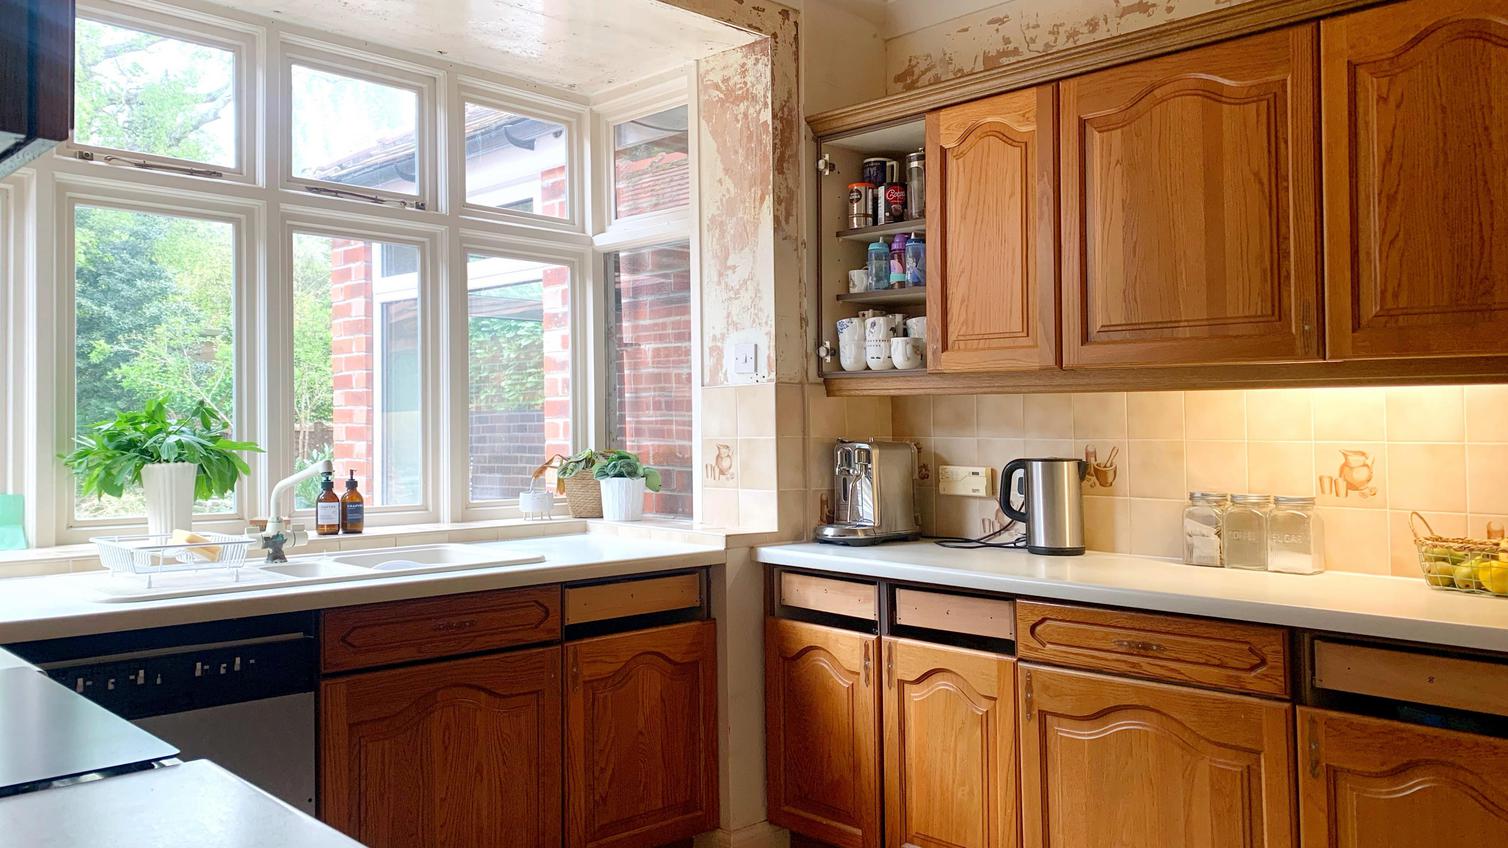 Oak shaker style kitchen with white worktops